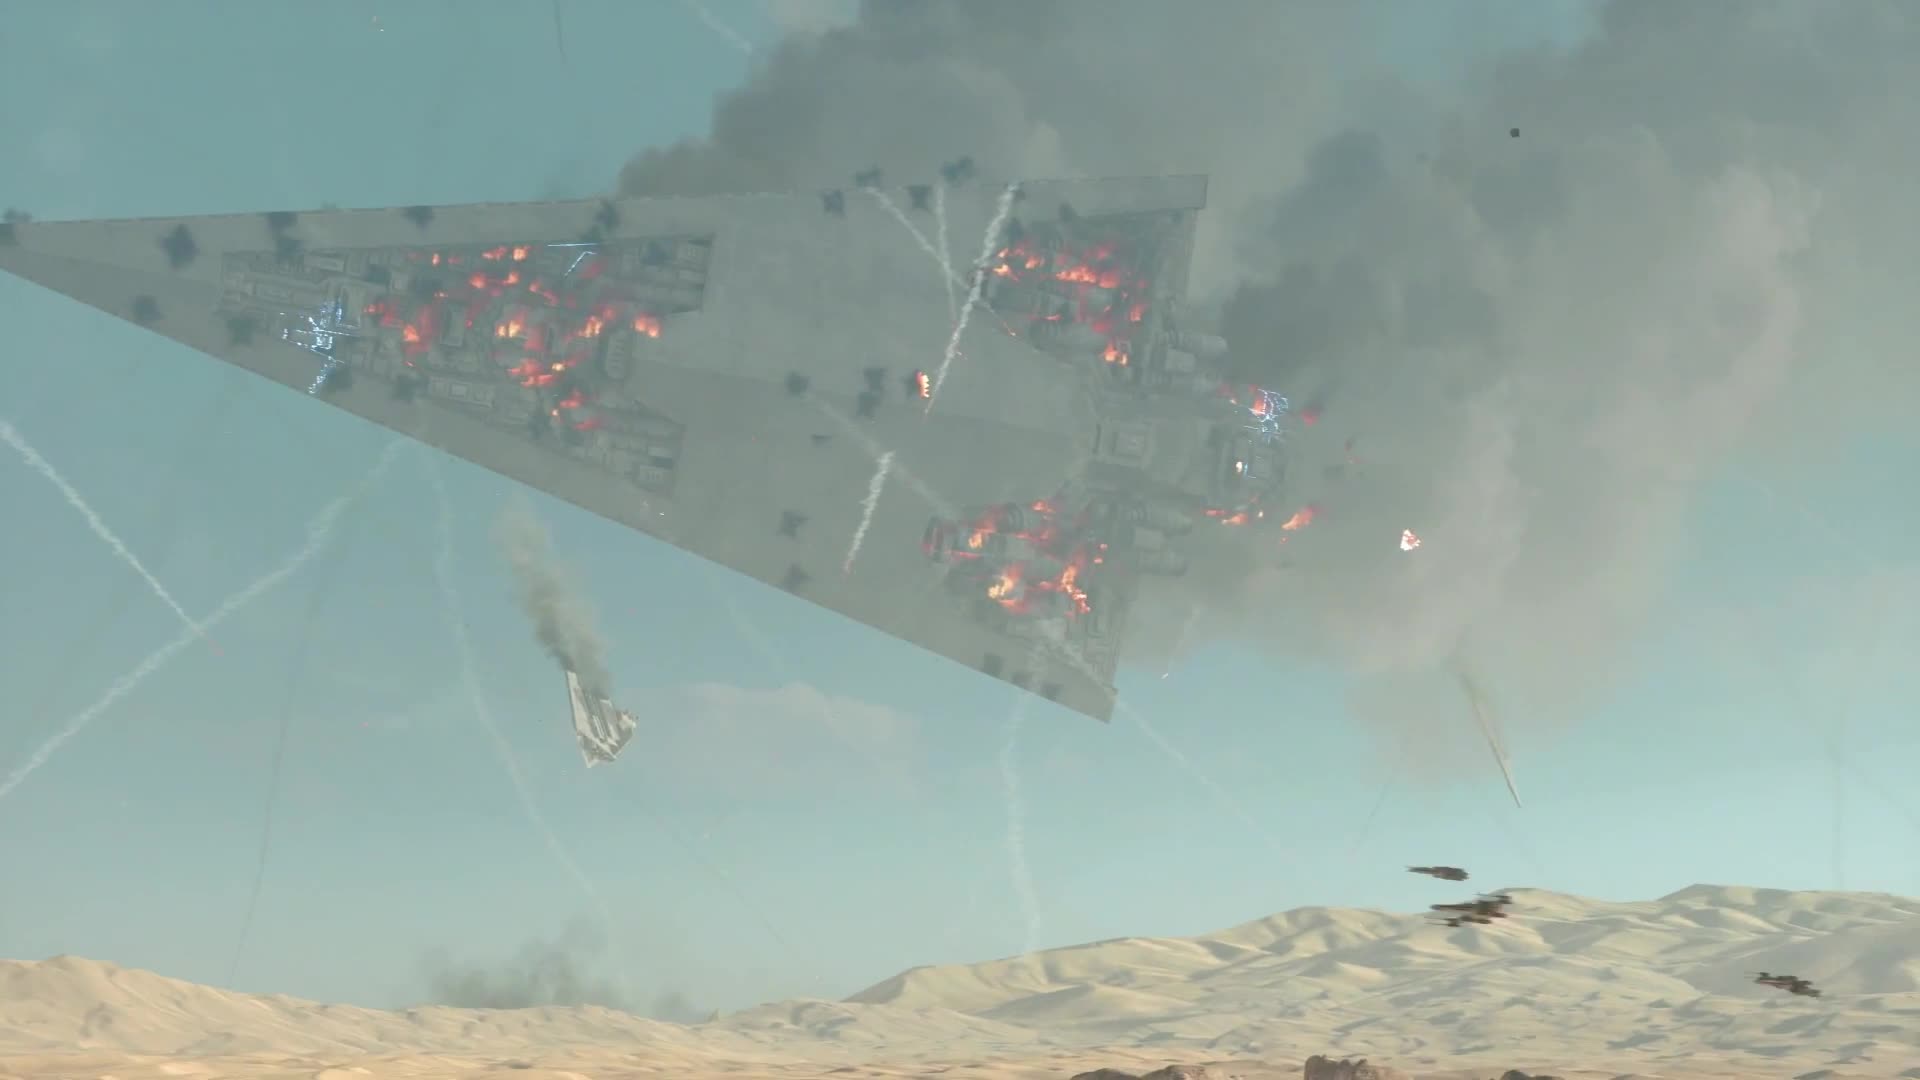 Star Wars Battlefront - Battle of Jakku DLC - trailer